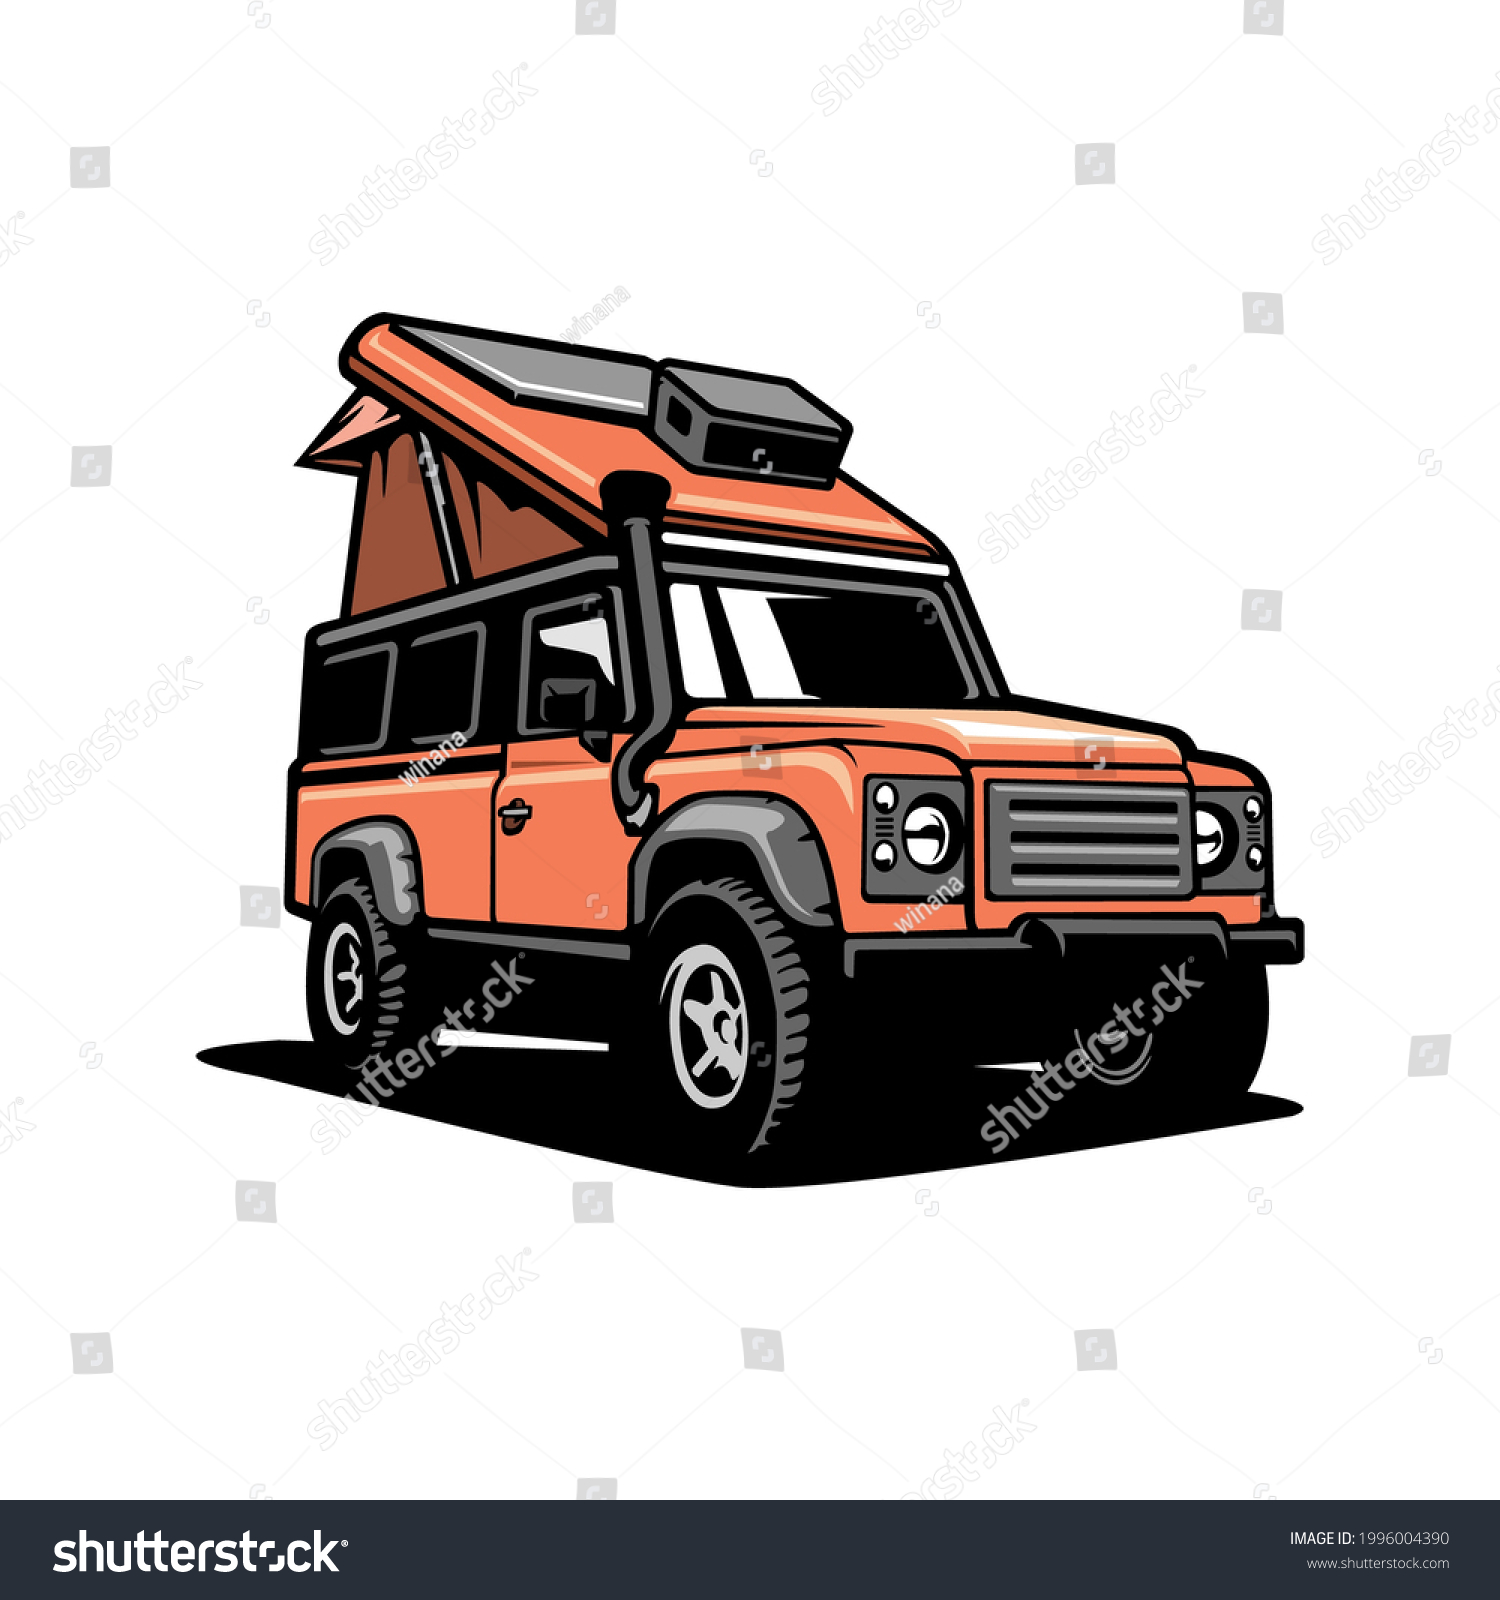 SVG of camper truck for icon, logo and illustration svg